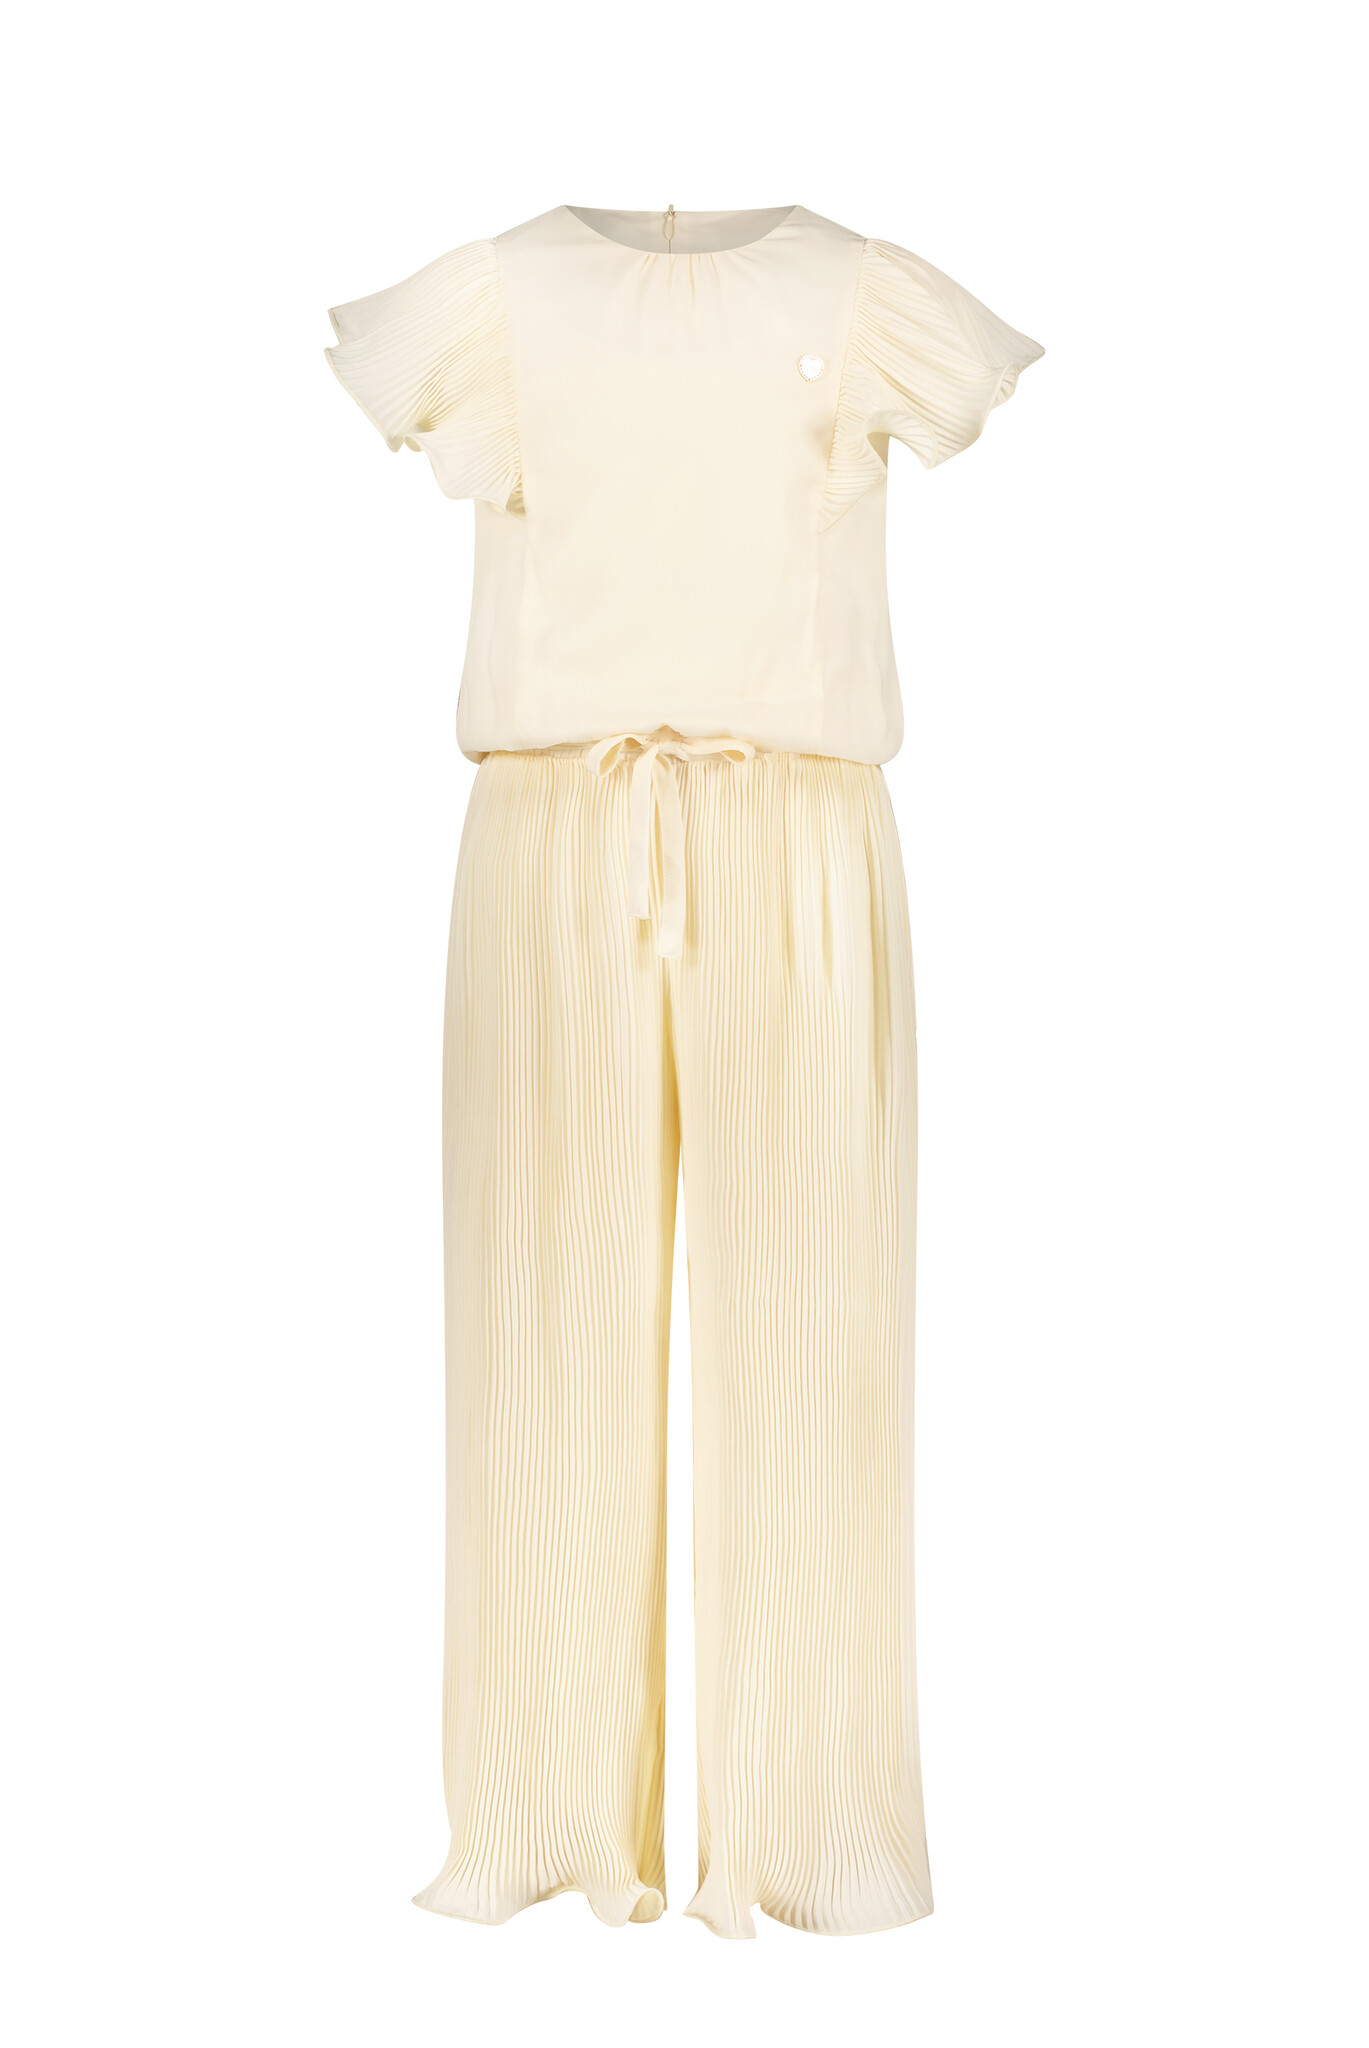 Le Chic C312-5631 Meisjes Jumpsuit - Pearled Ivory - Maat 140